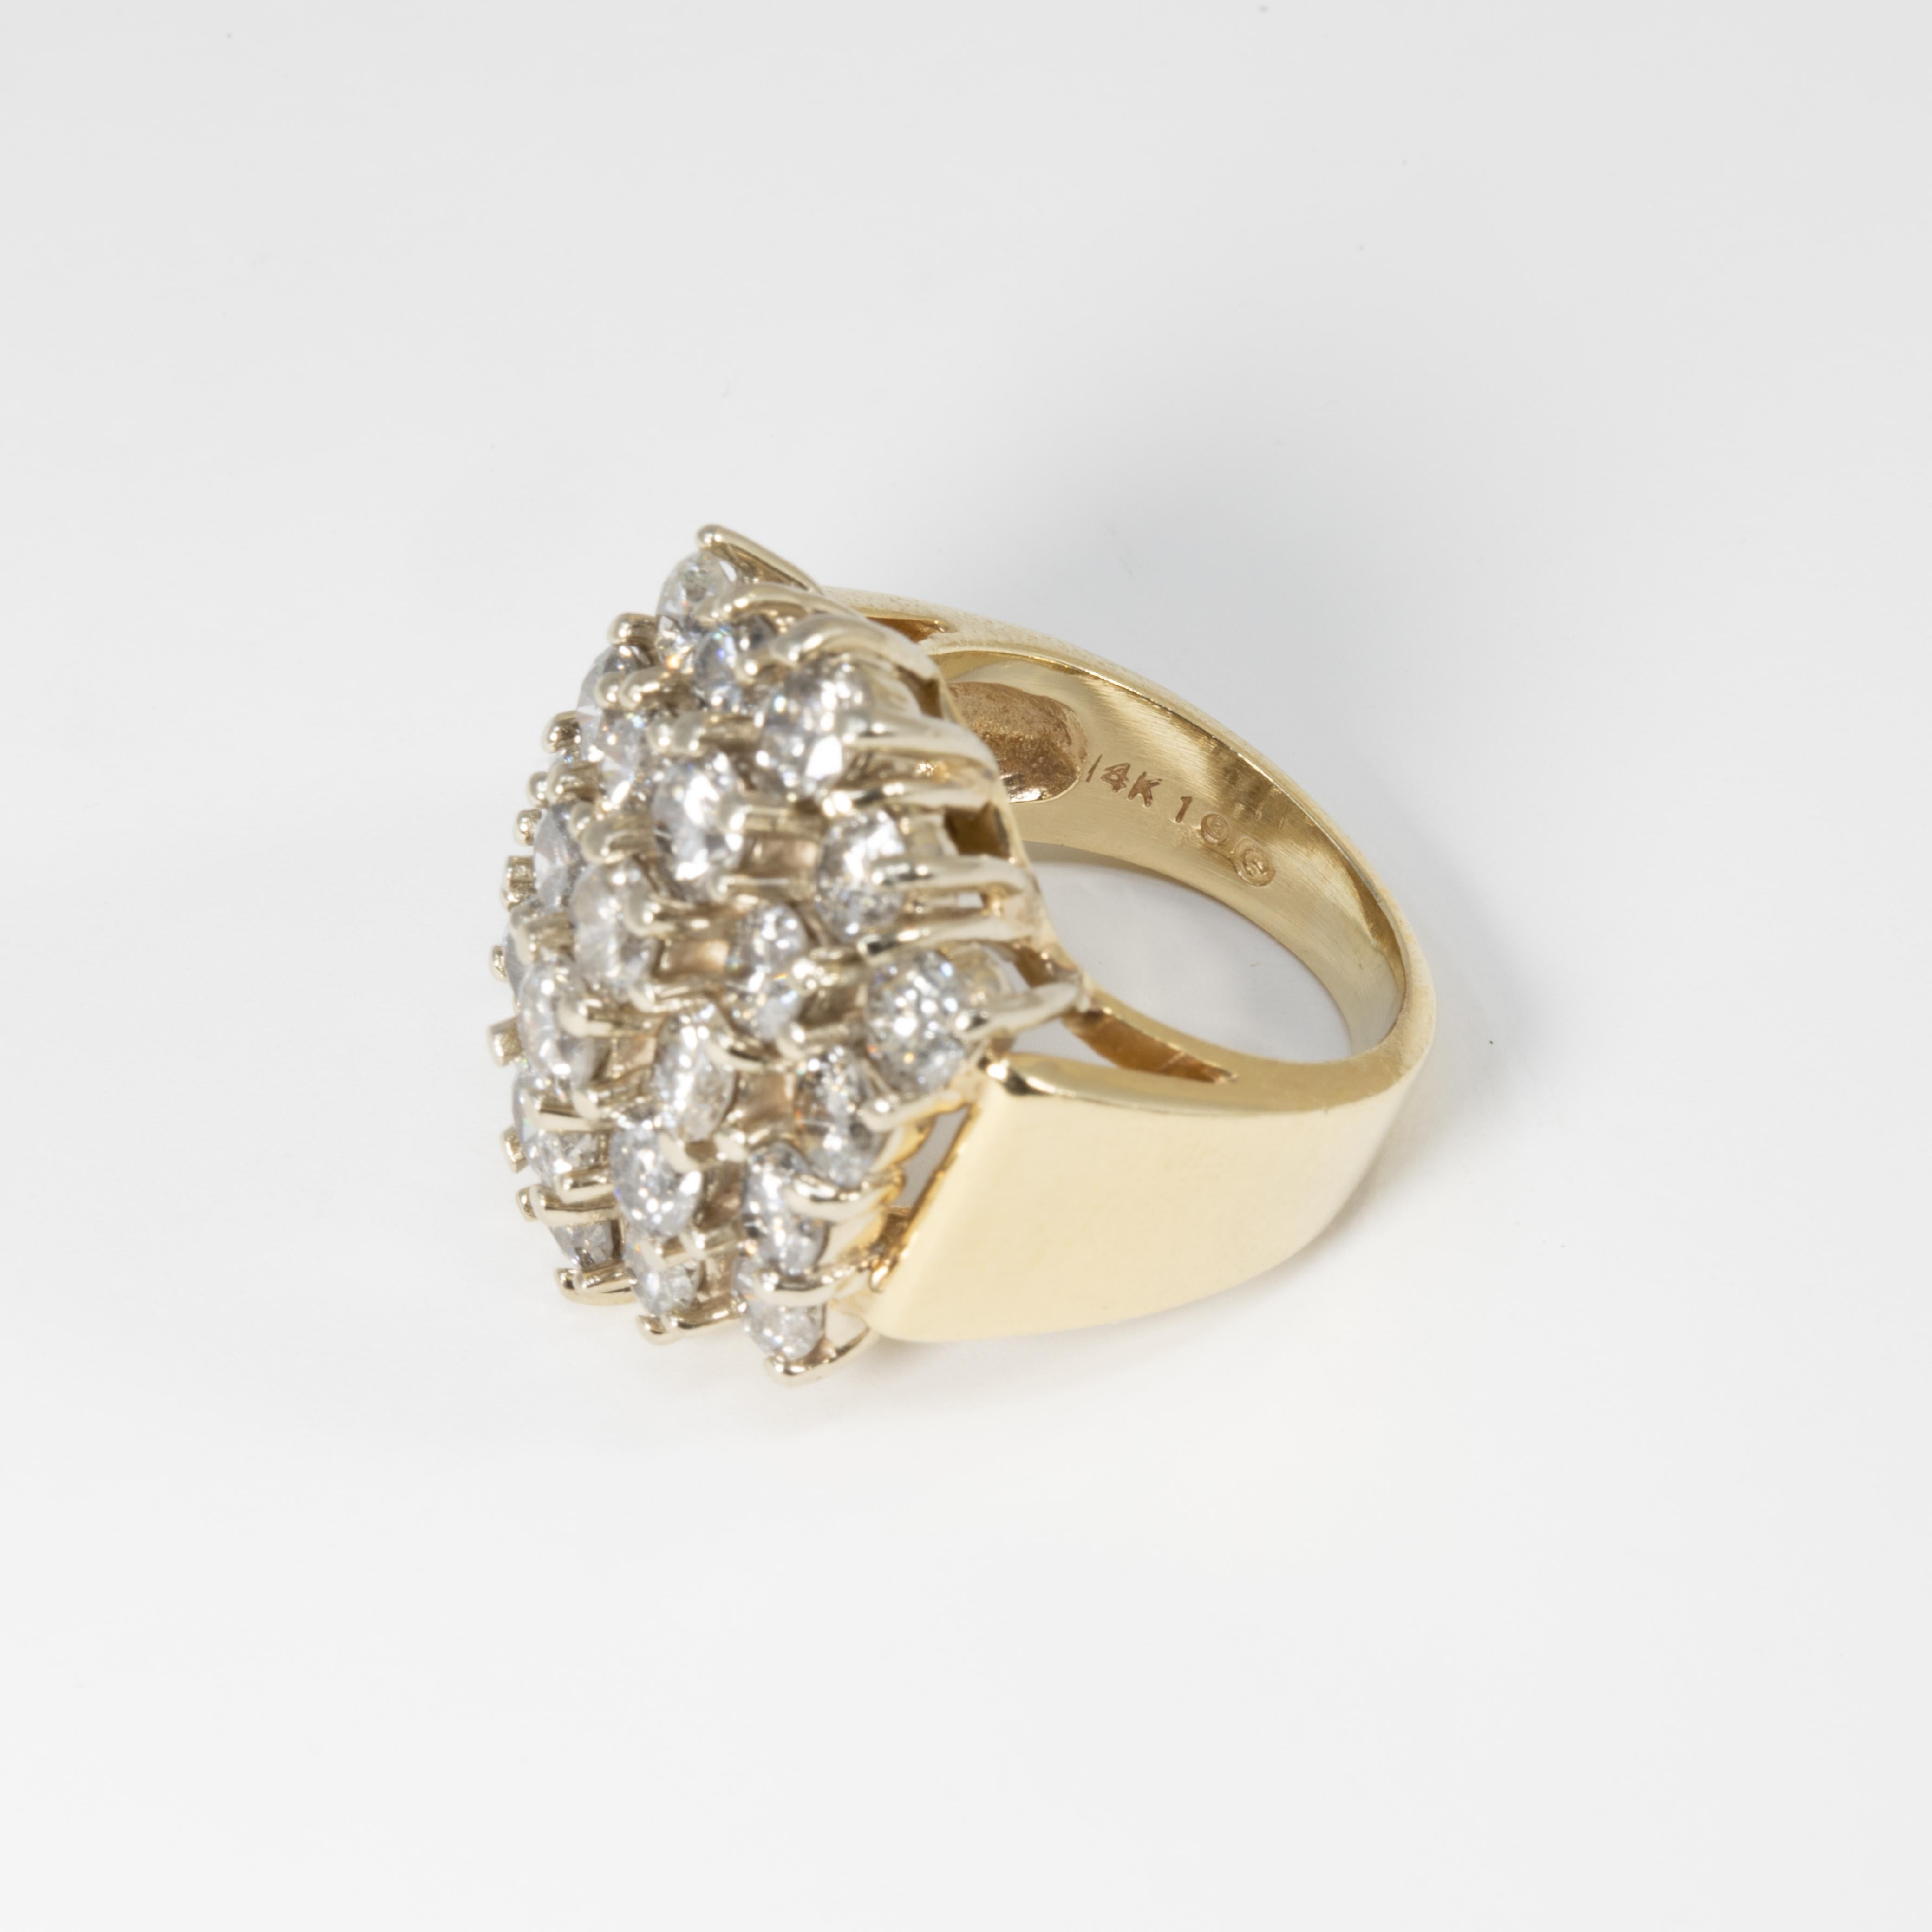 4 karat diamond ring